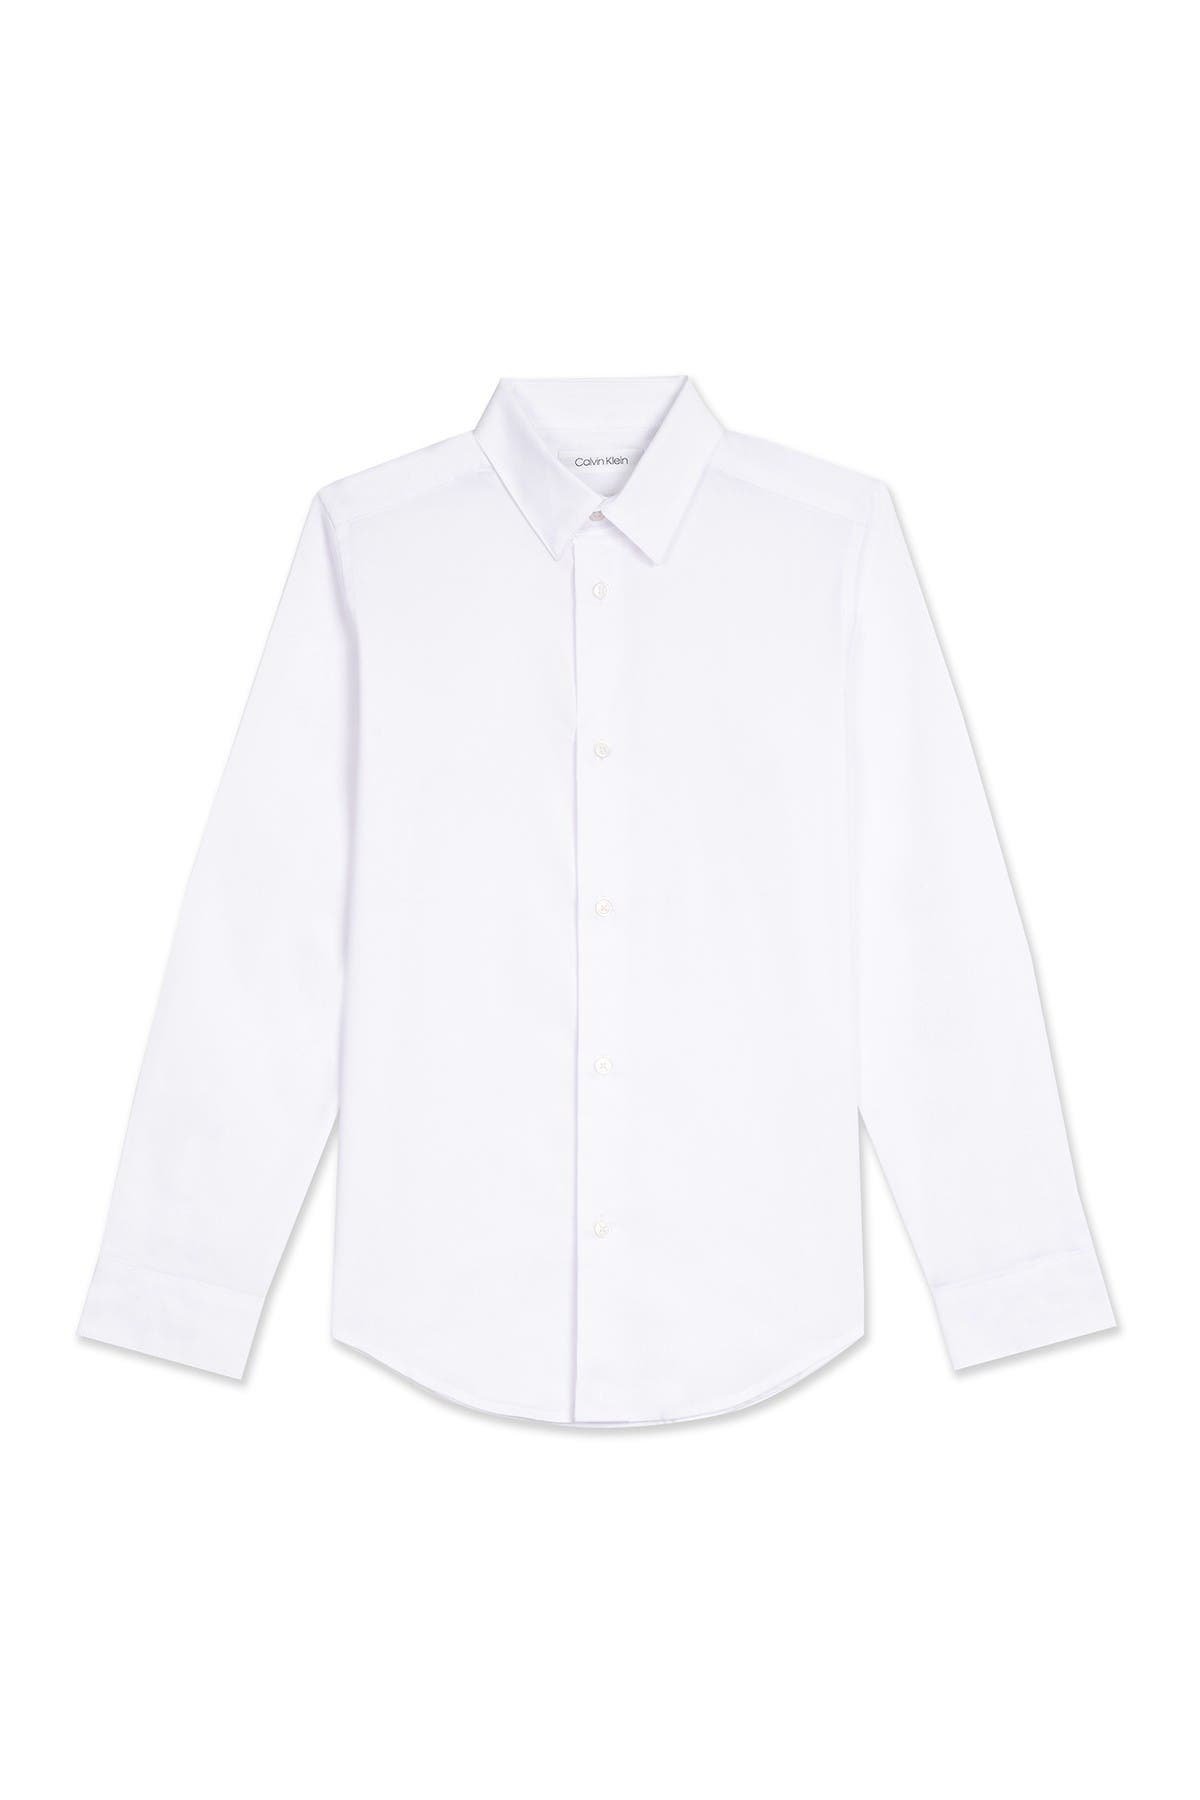 Calvin Klein Kids' Solid Long Sleeve Slim Fit Shirt In White